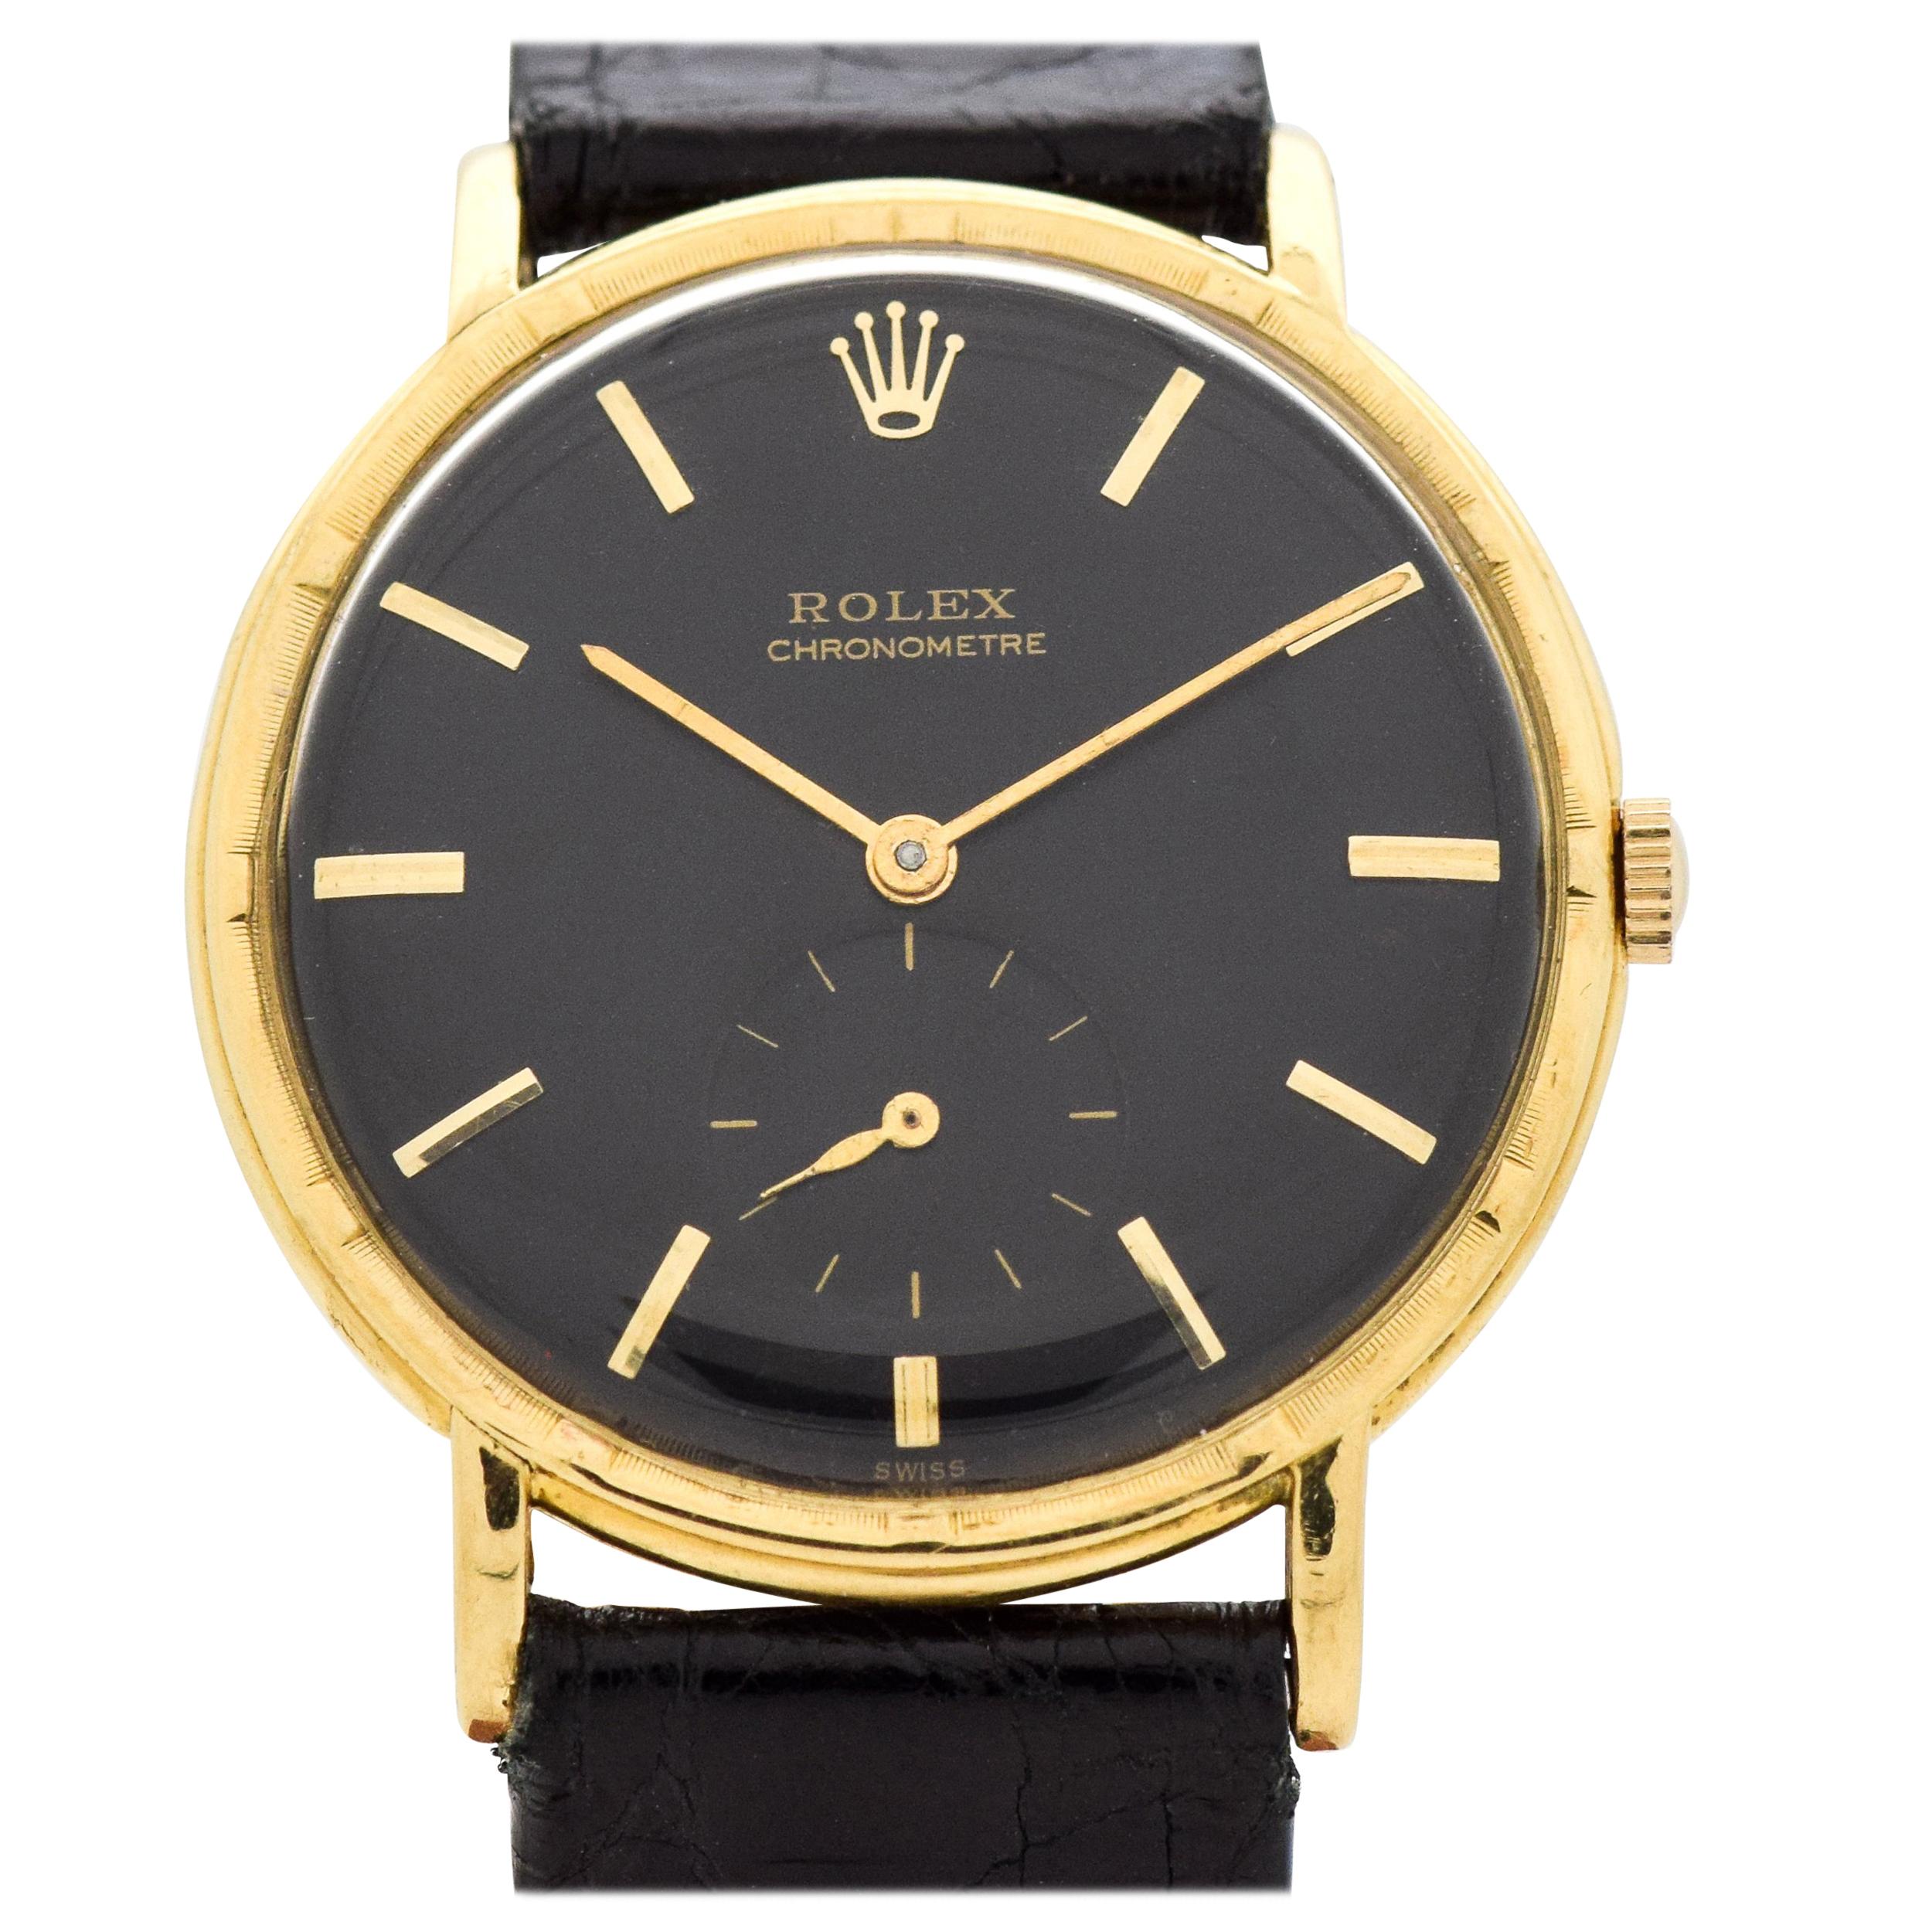 Vintage Rolex Chronometer Reference 4325, 1950s